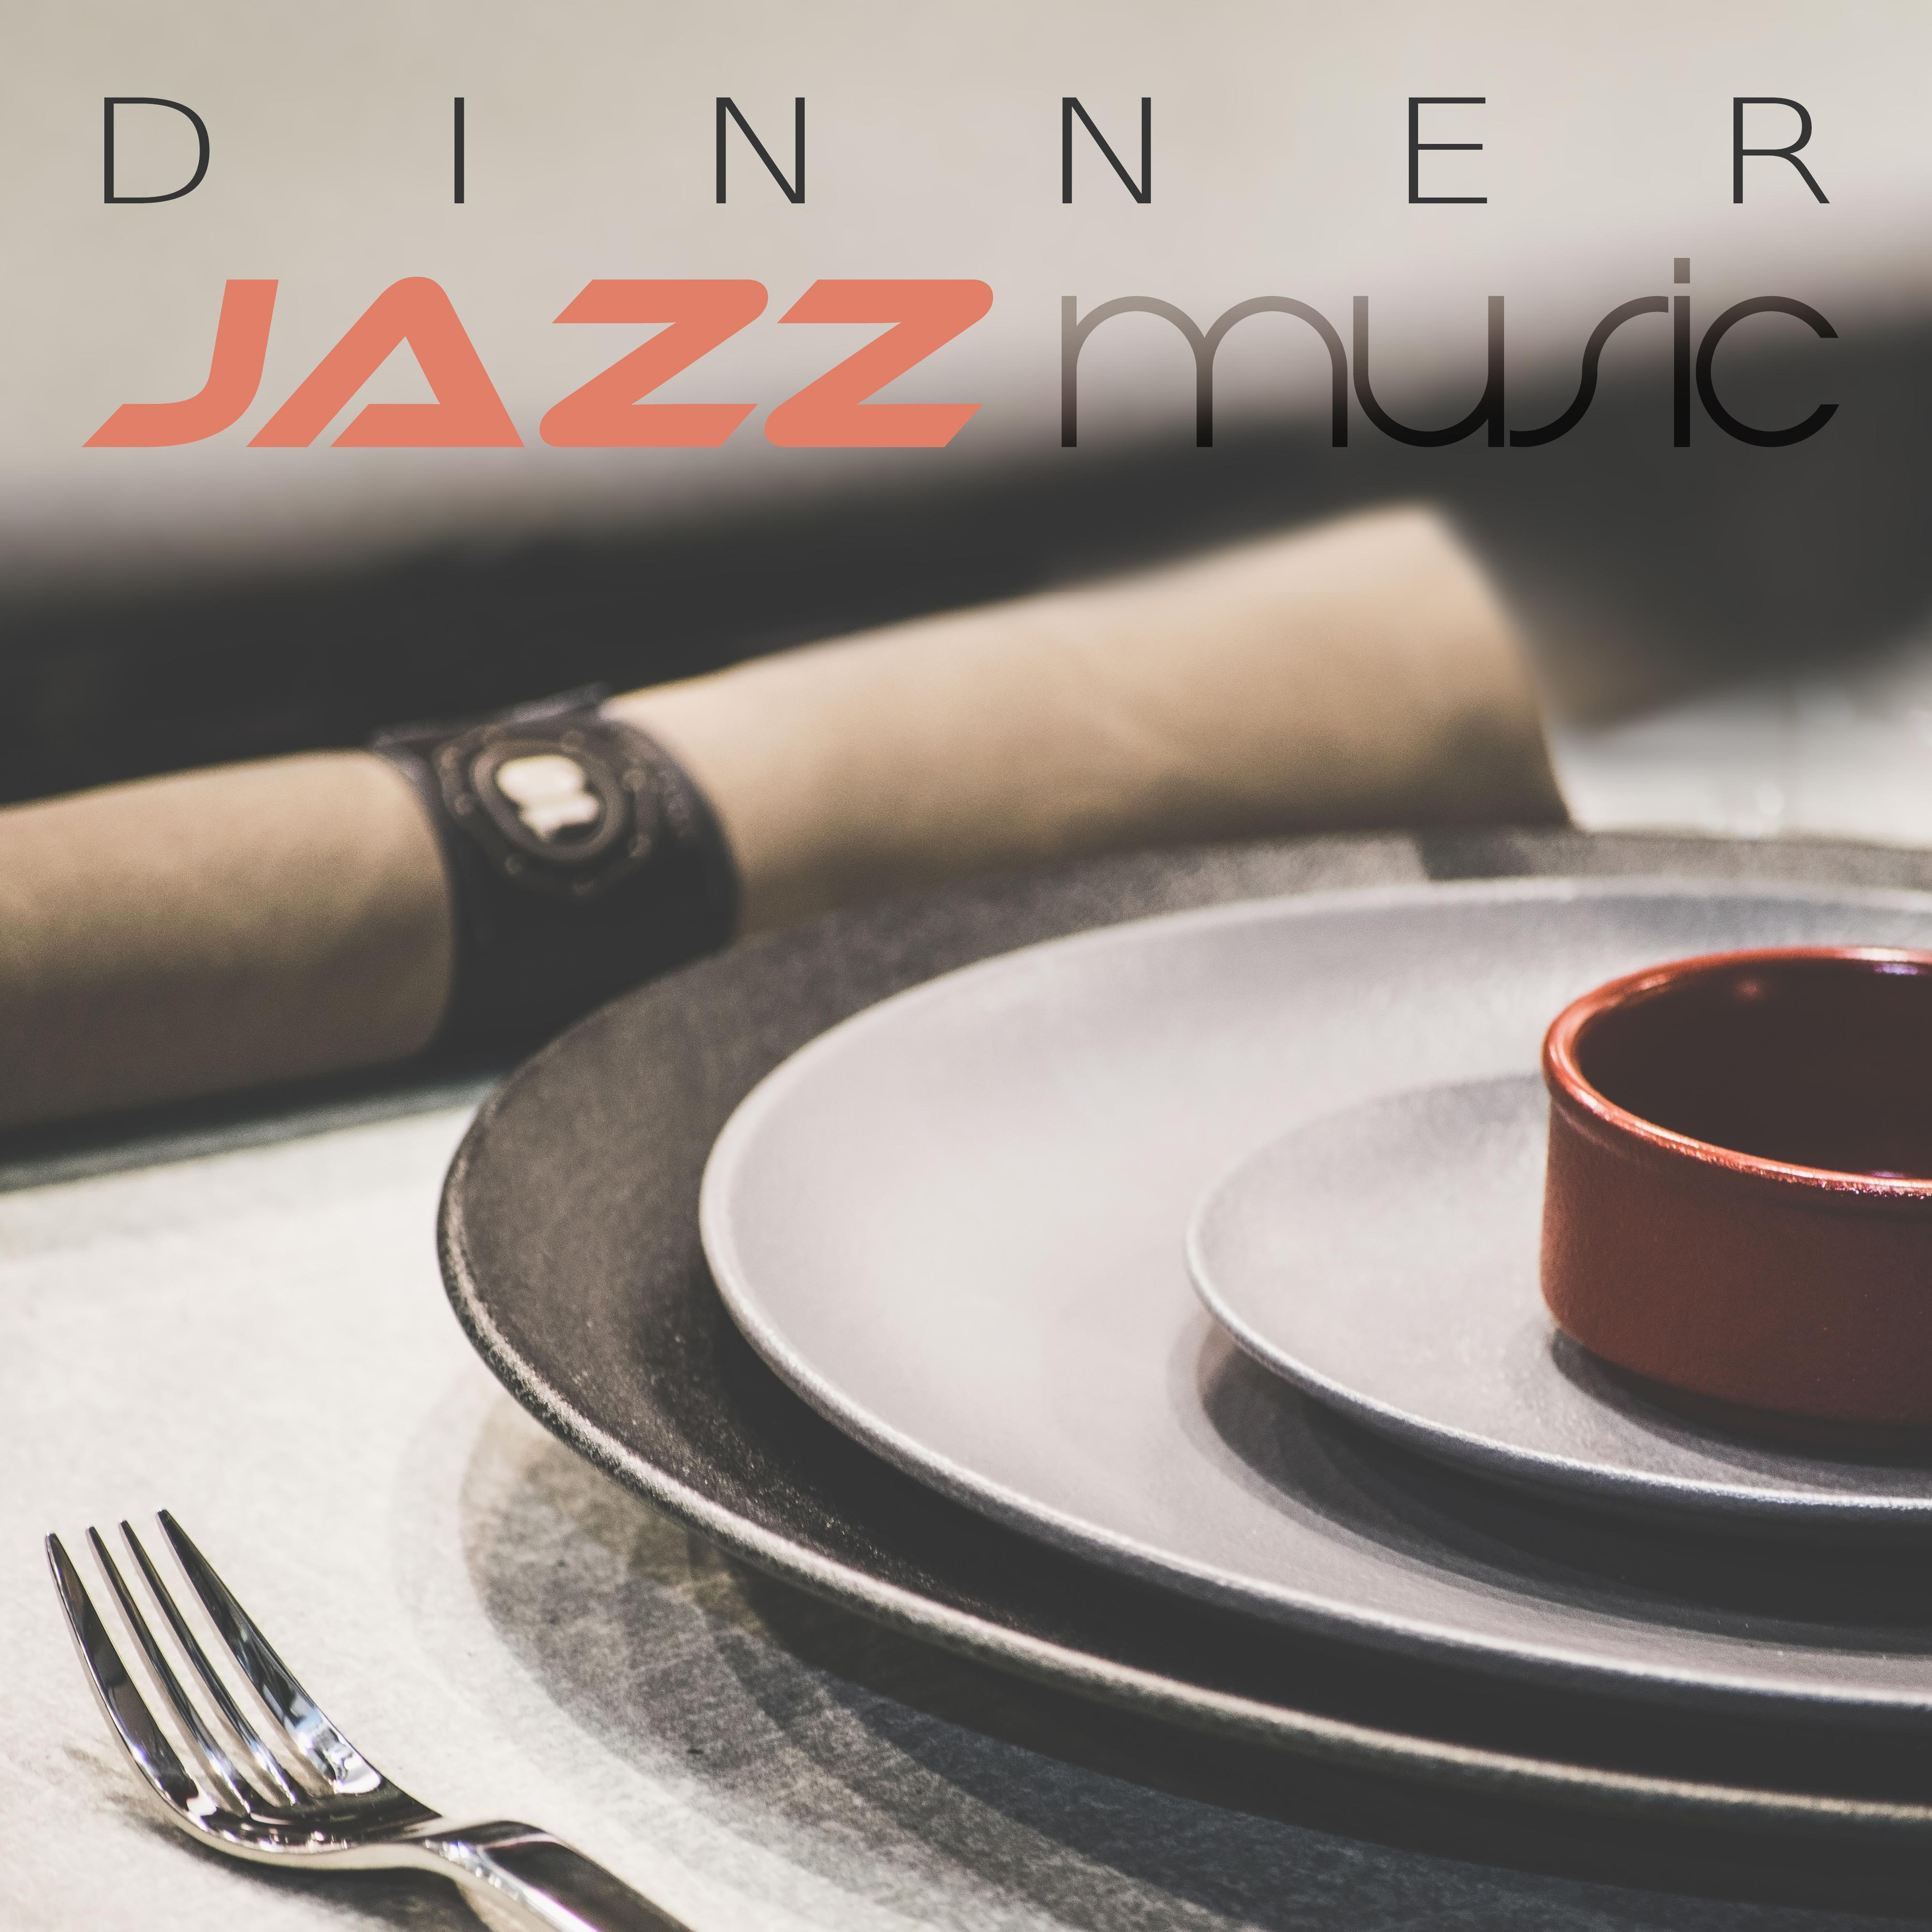 Dinner Jazz Music  Smooth Jazz, Sensual Piano Sounds, Peaceful Jazz, Restaurant  Cafe Bar, Easy Listening